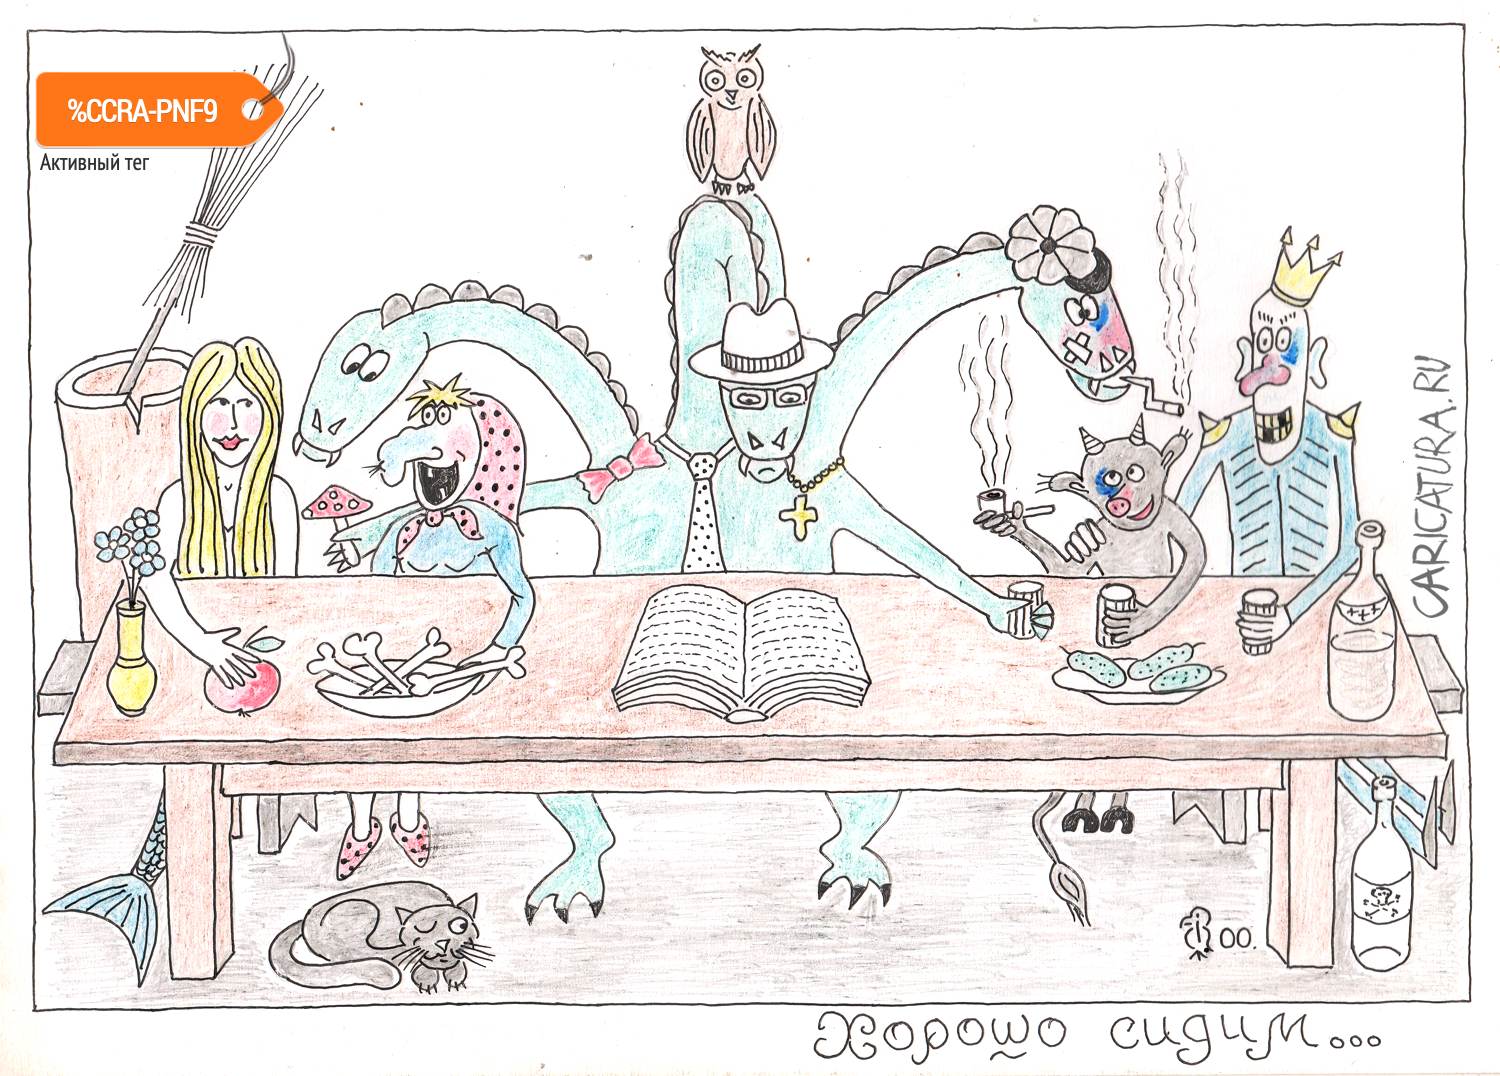 Карикатура "Хорошо сидим", Вяч Минаев